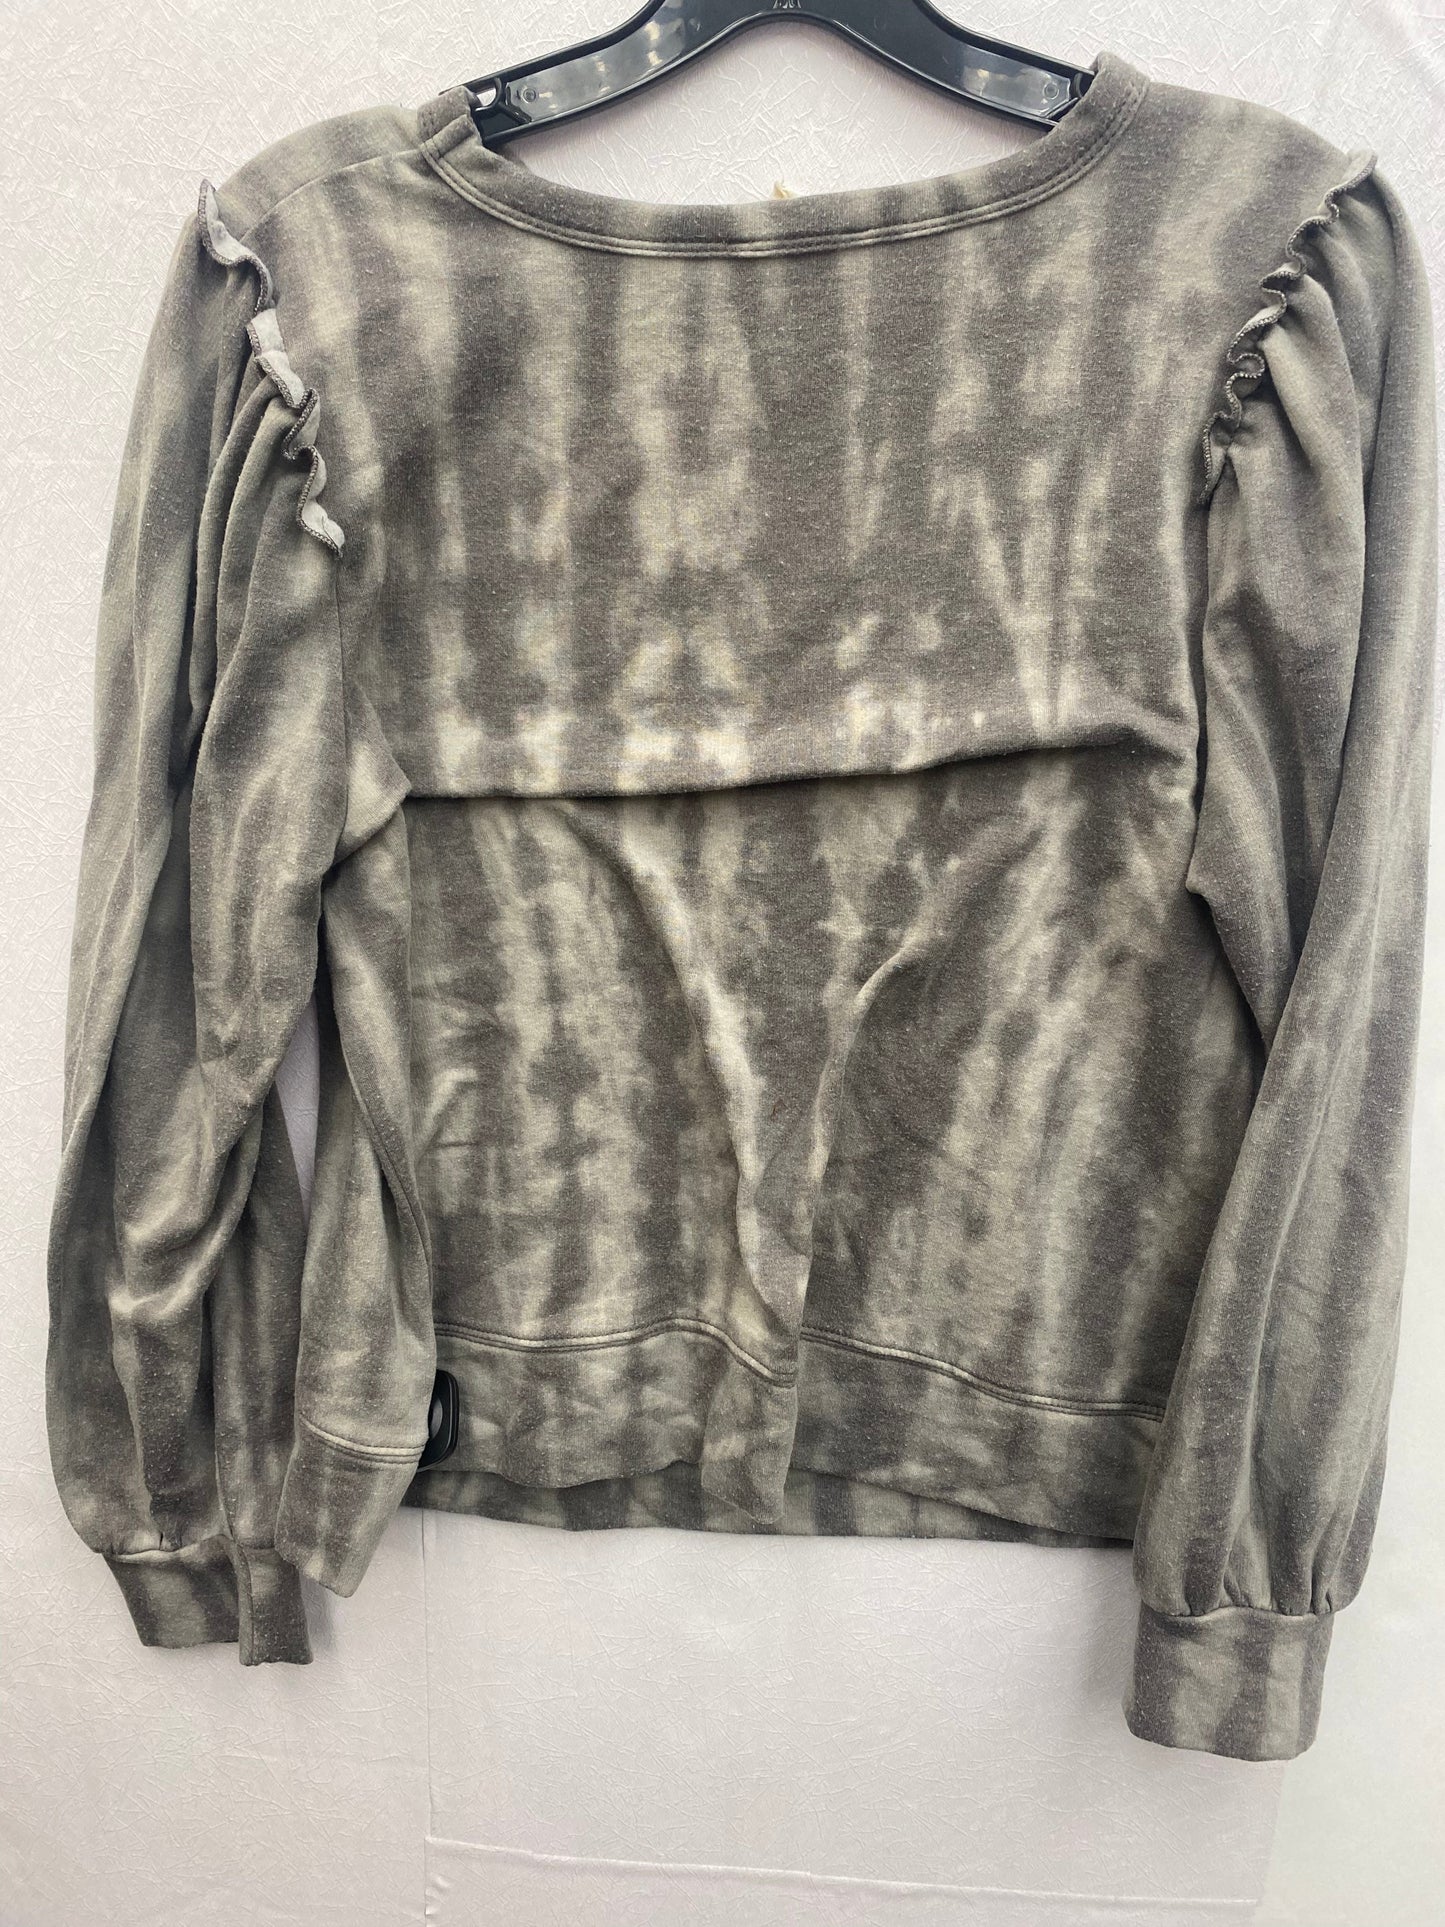 Sweatshirt Crewneck By Clothes Mentor  Size: M